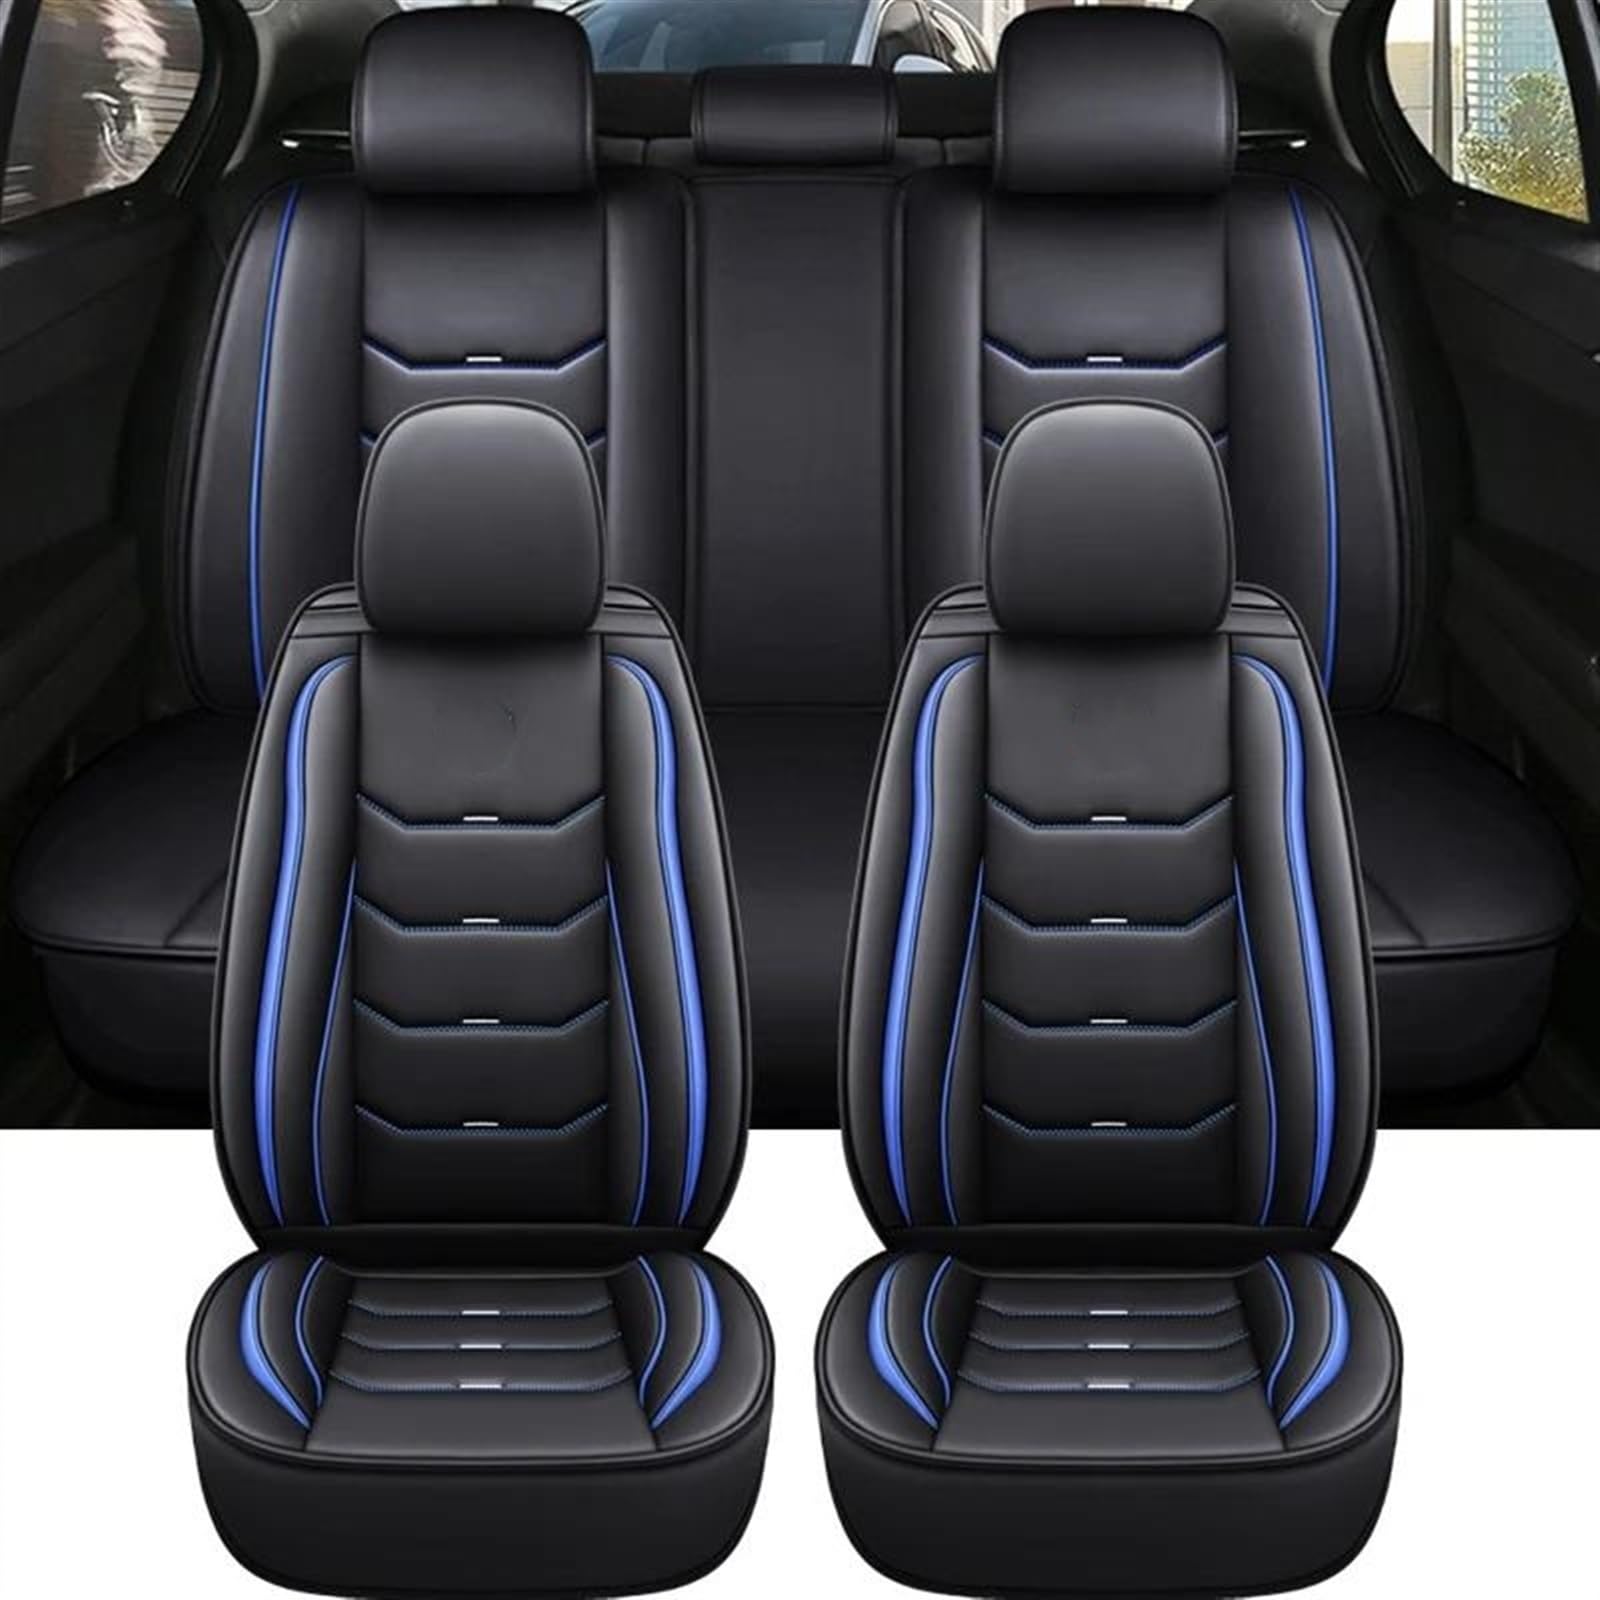 Kompatibel Mit E60 Für F30 E46 E36 E39 E30 5 Sitzplätze Universal-Autositzbezug Innenbezüge Für Vordersitze Rückbank-Sitzbezug-Schutz Schonbezug Autositz(2,B) von MINBAV